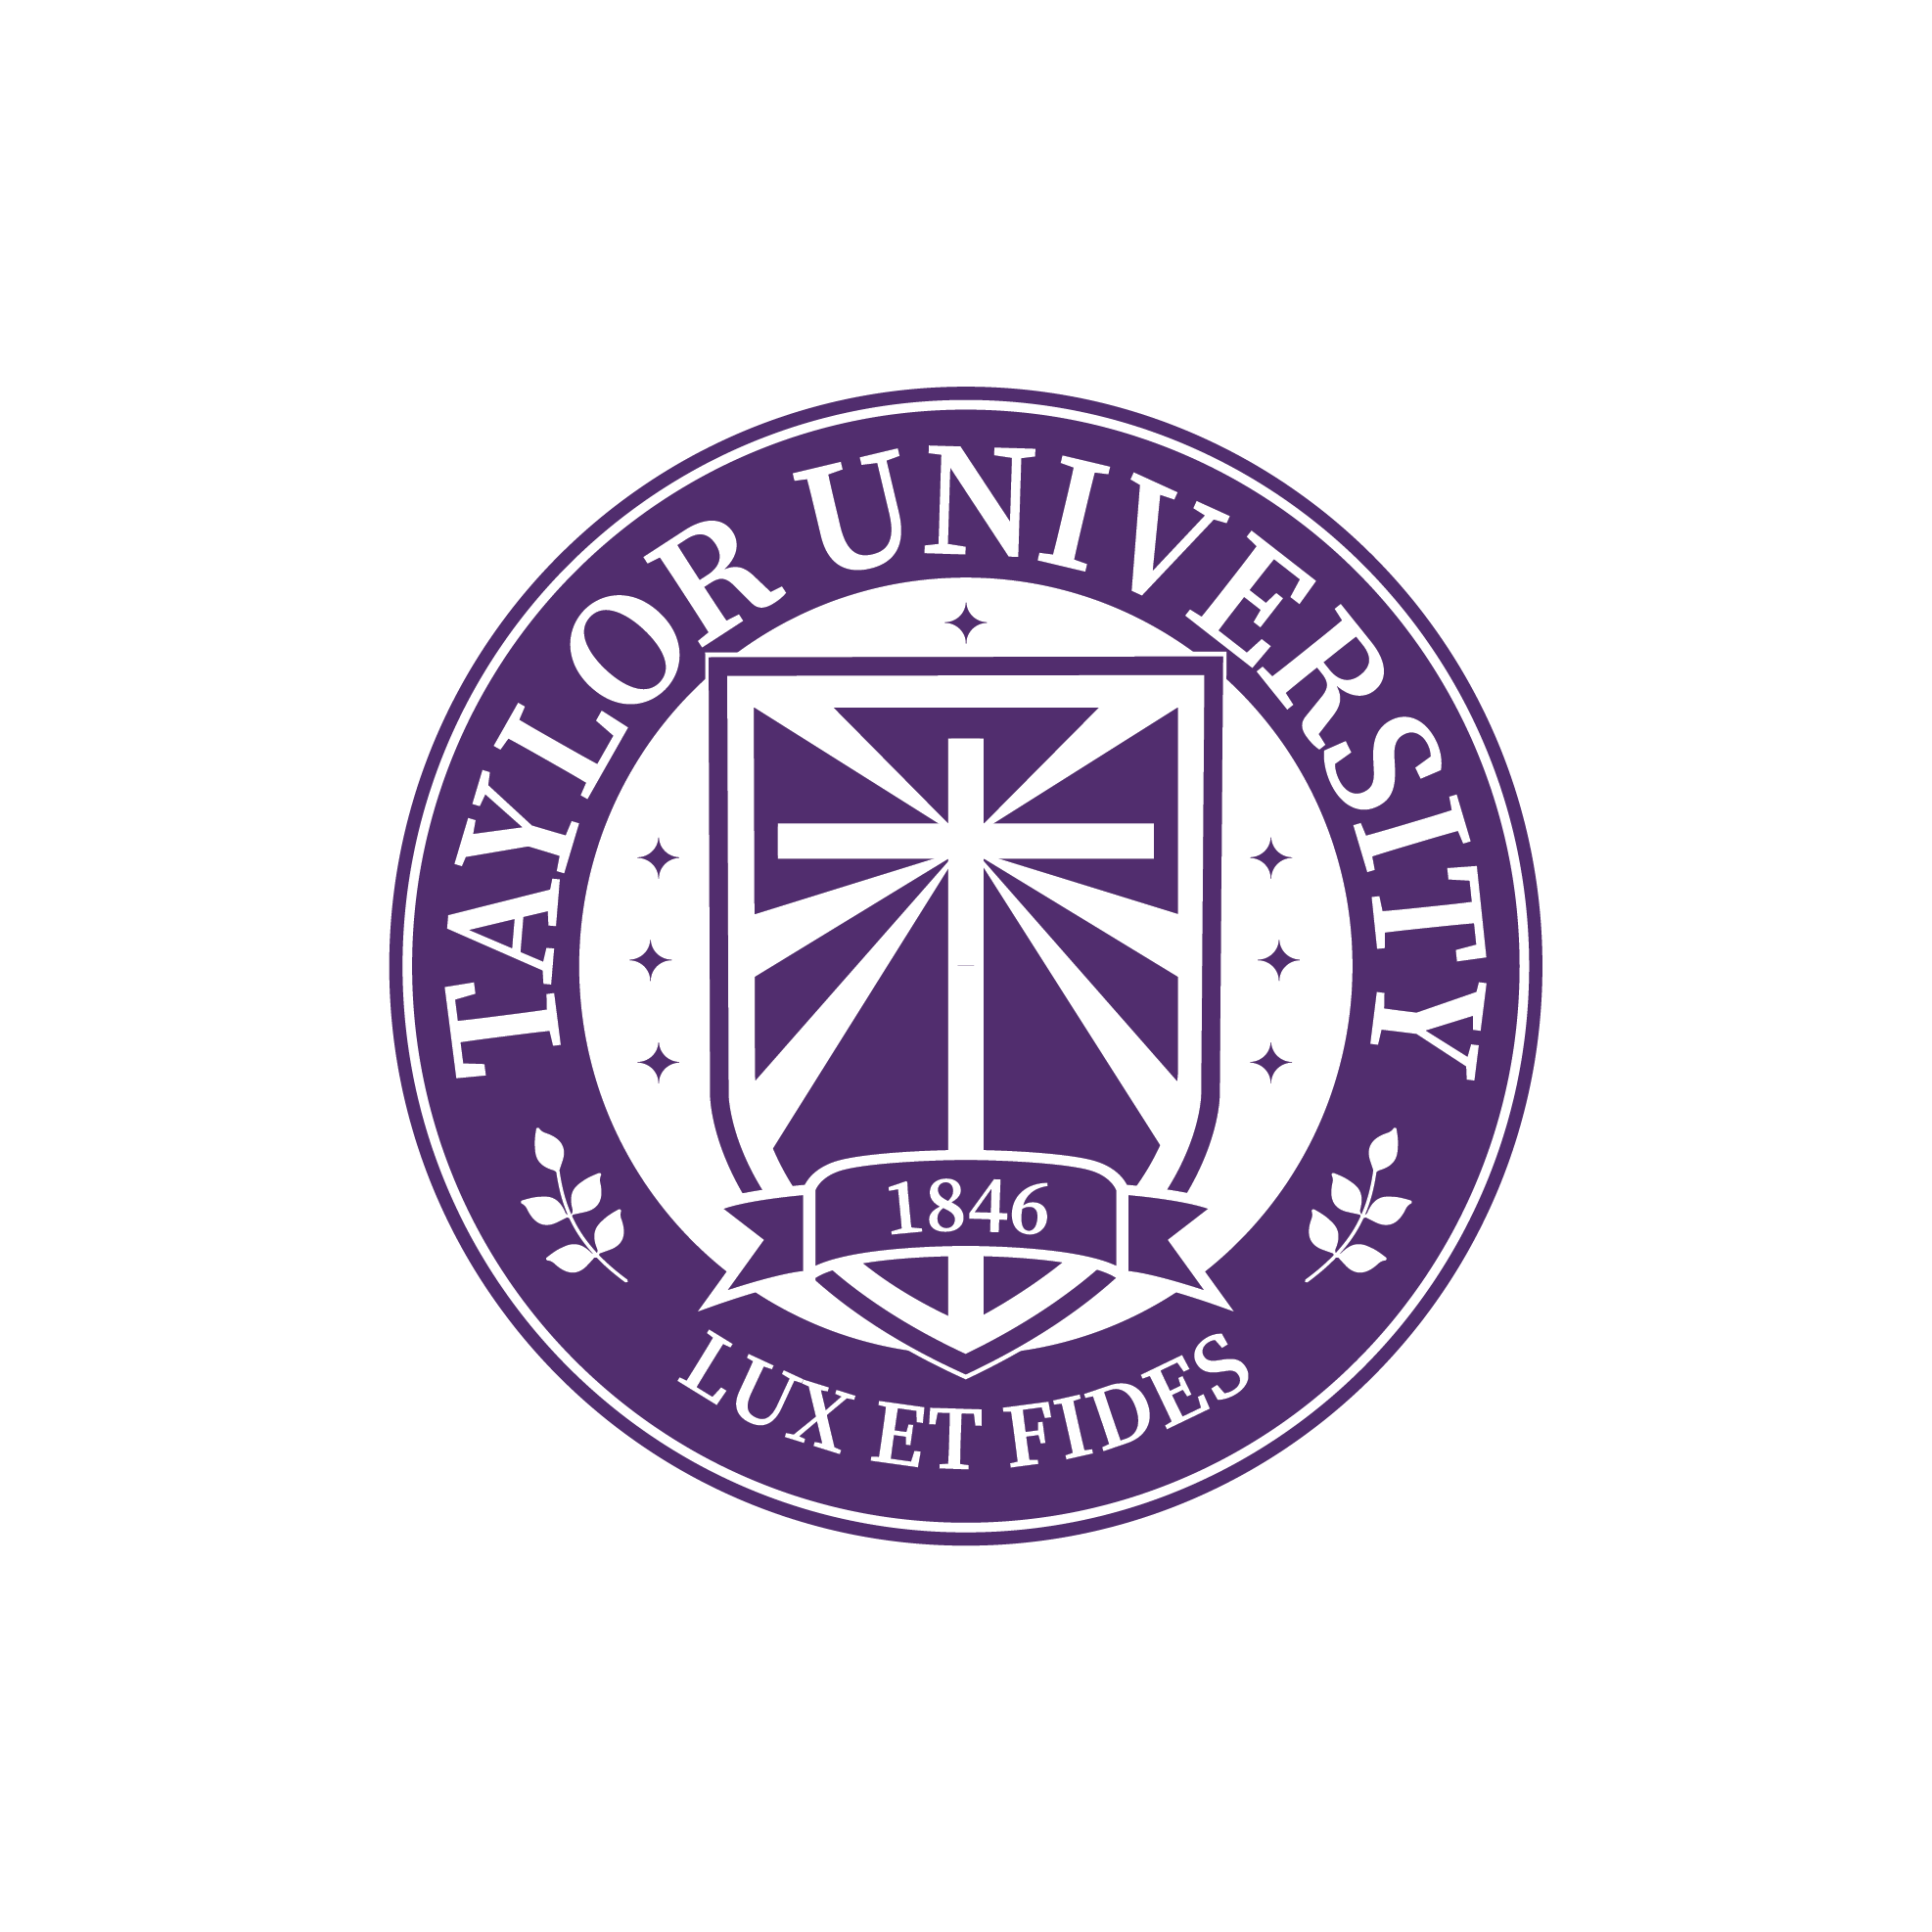 Taylor University Seal